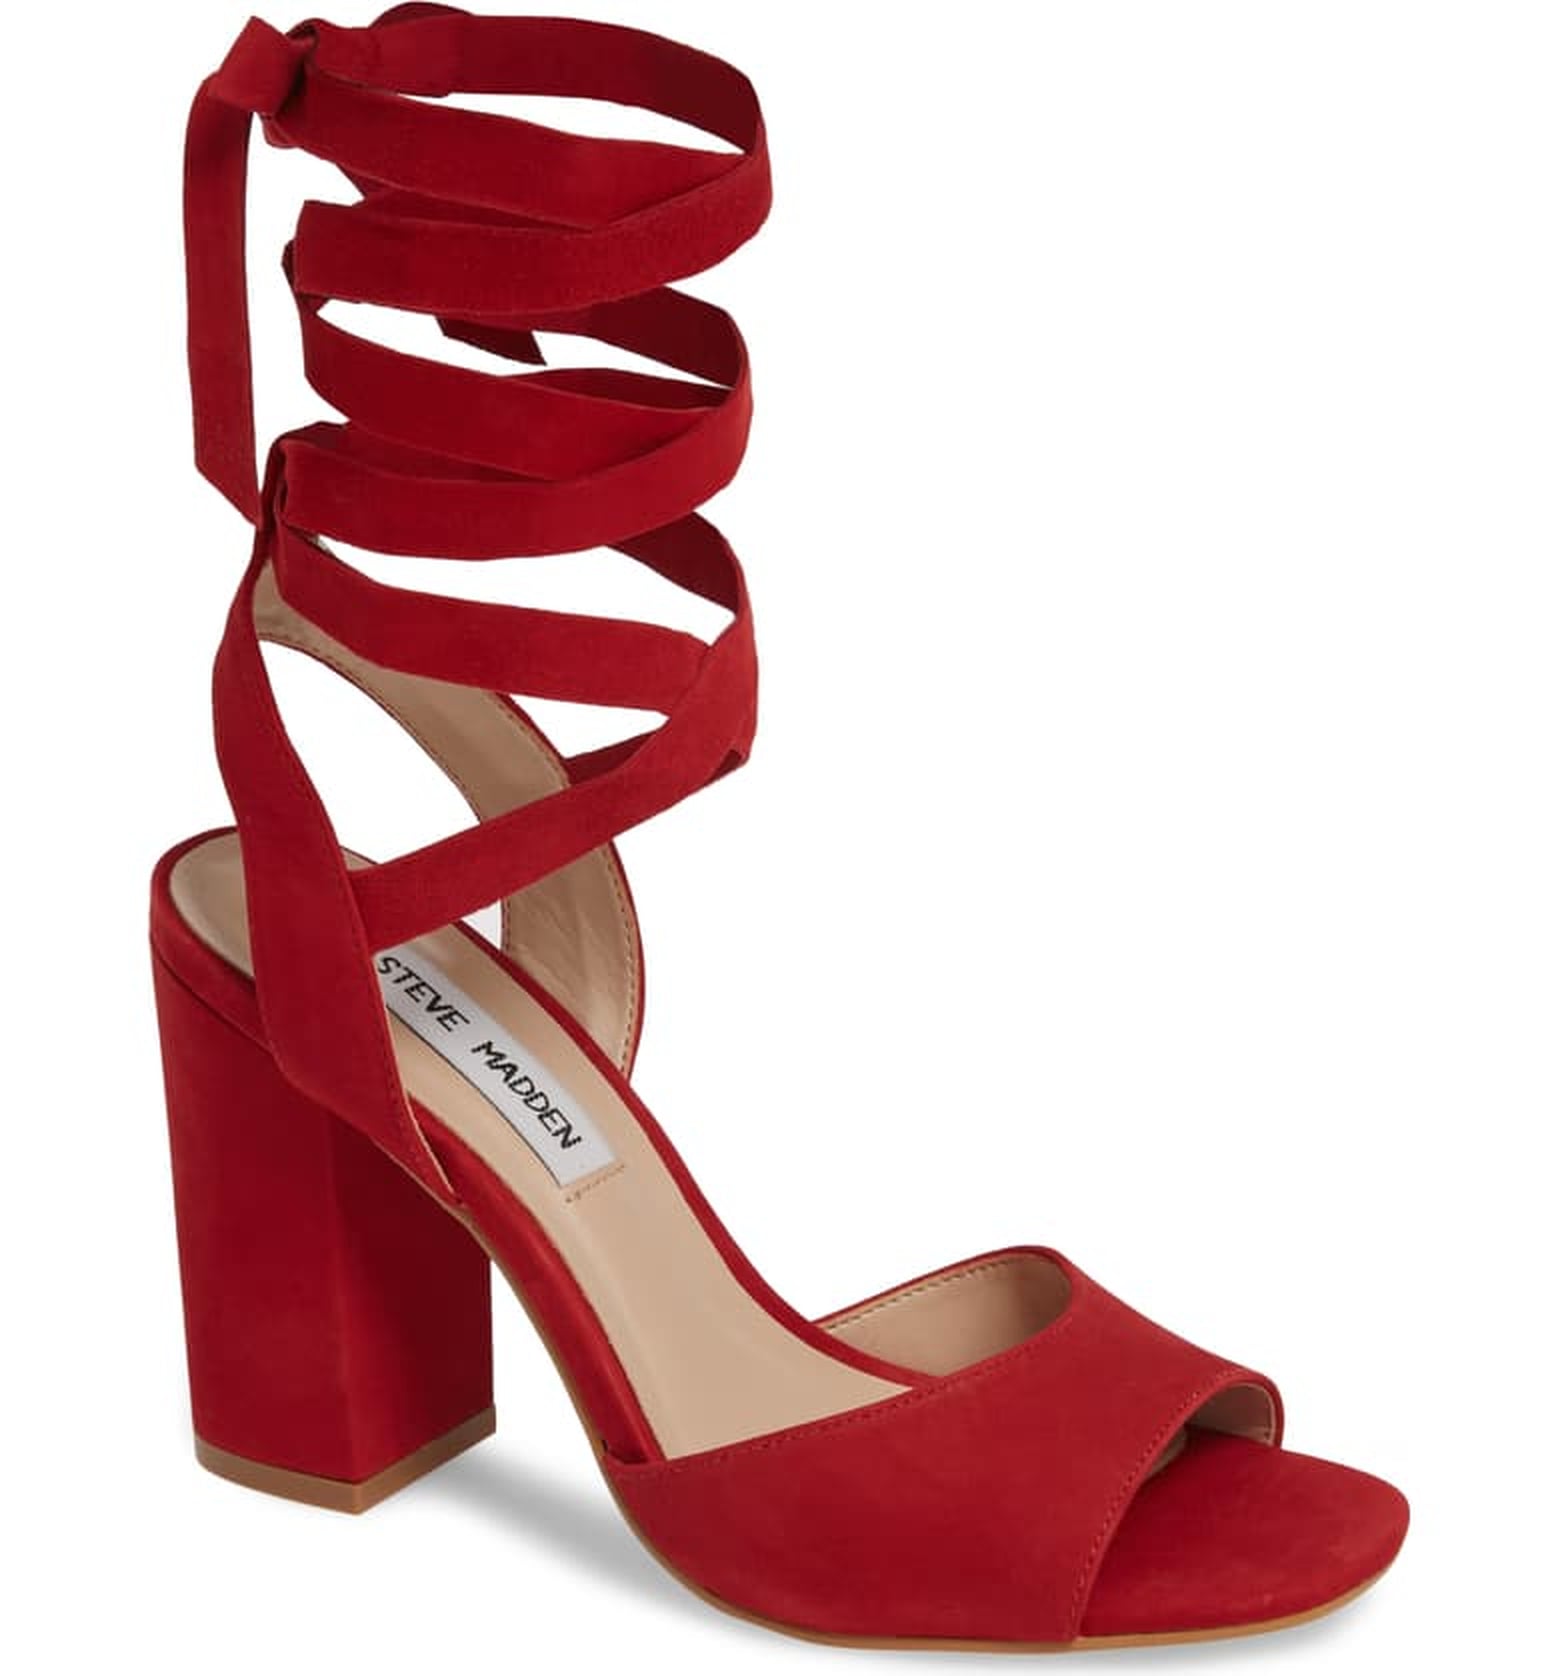 Hailey Baldwin's Red Lace-Up Heels | POPSUGAR Fashion